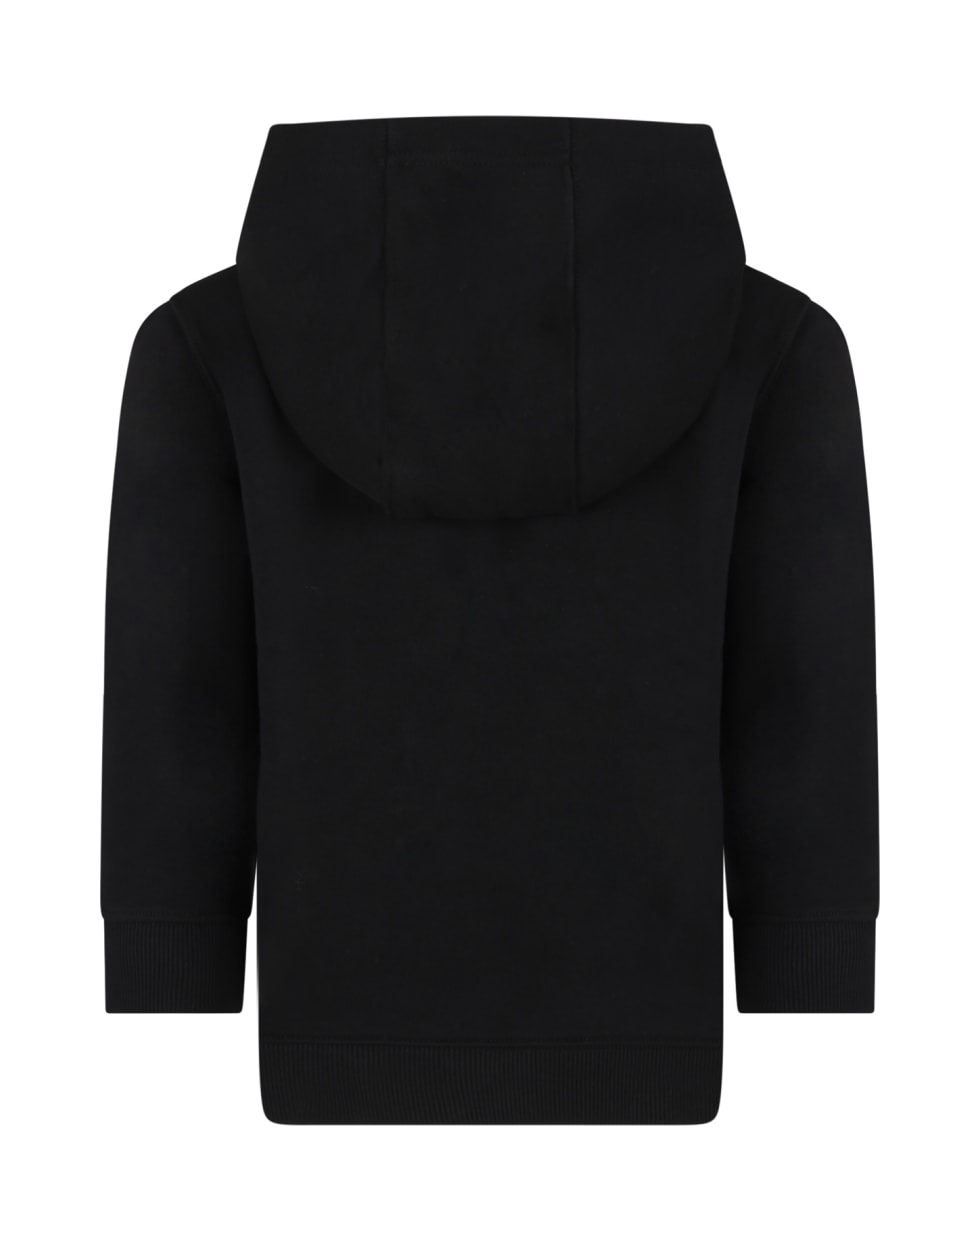 Givenchy Black Sweatshirt For Boy With Prints - Black